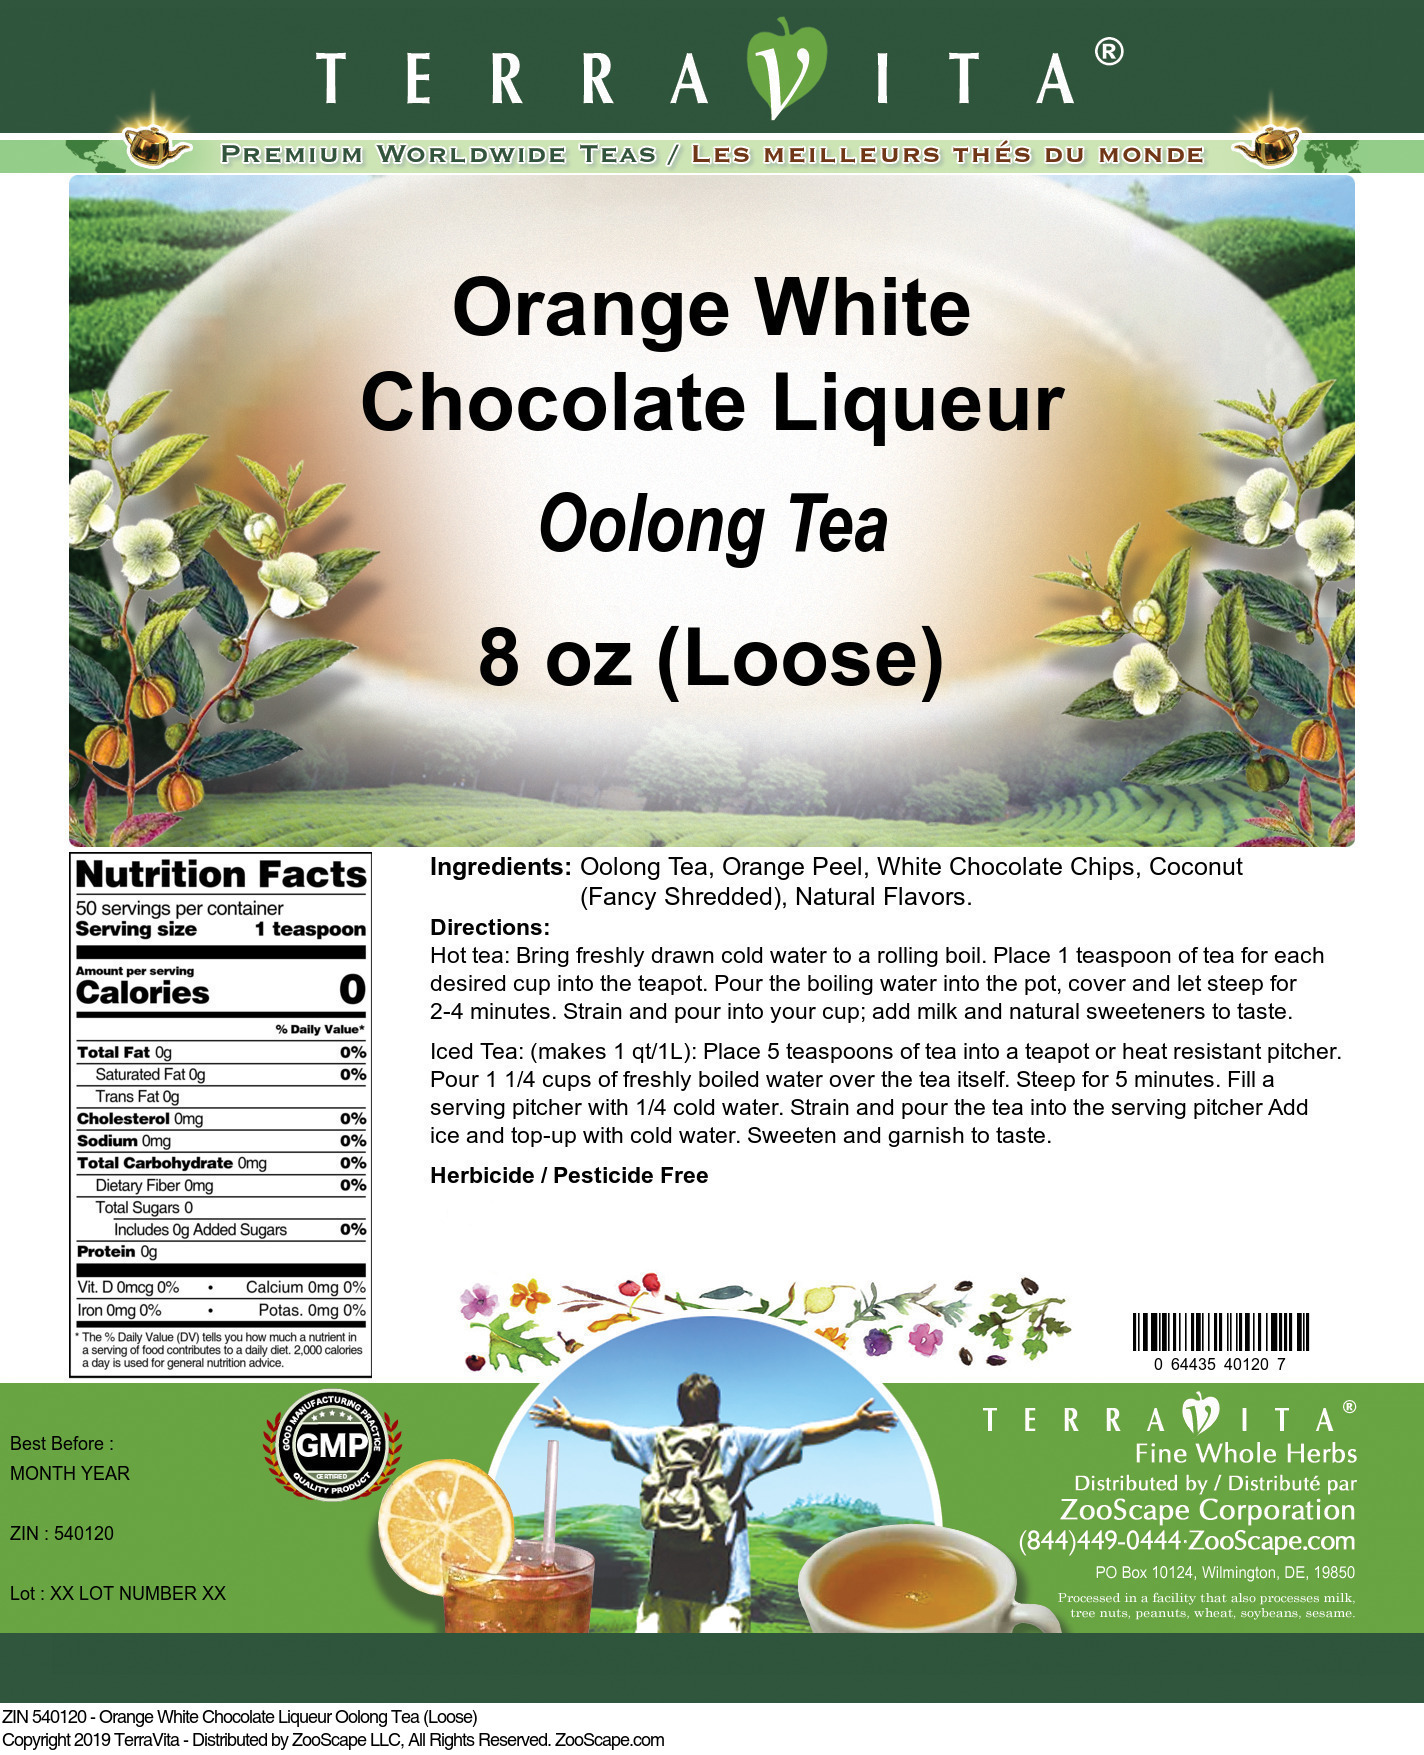 Orange White Chocolate Liqueur Oolong Tea (Loose) - Label